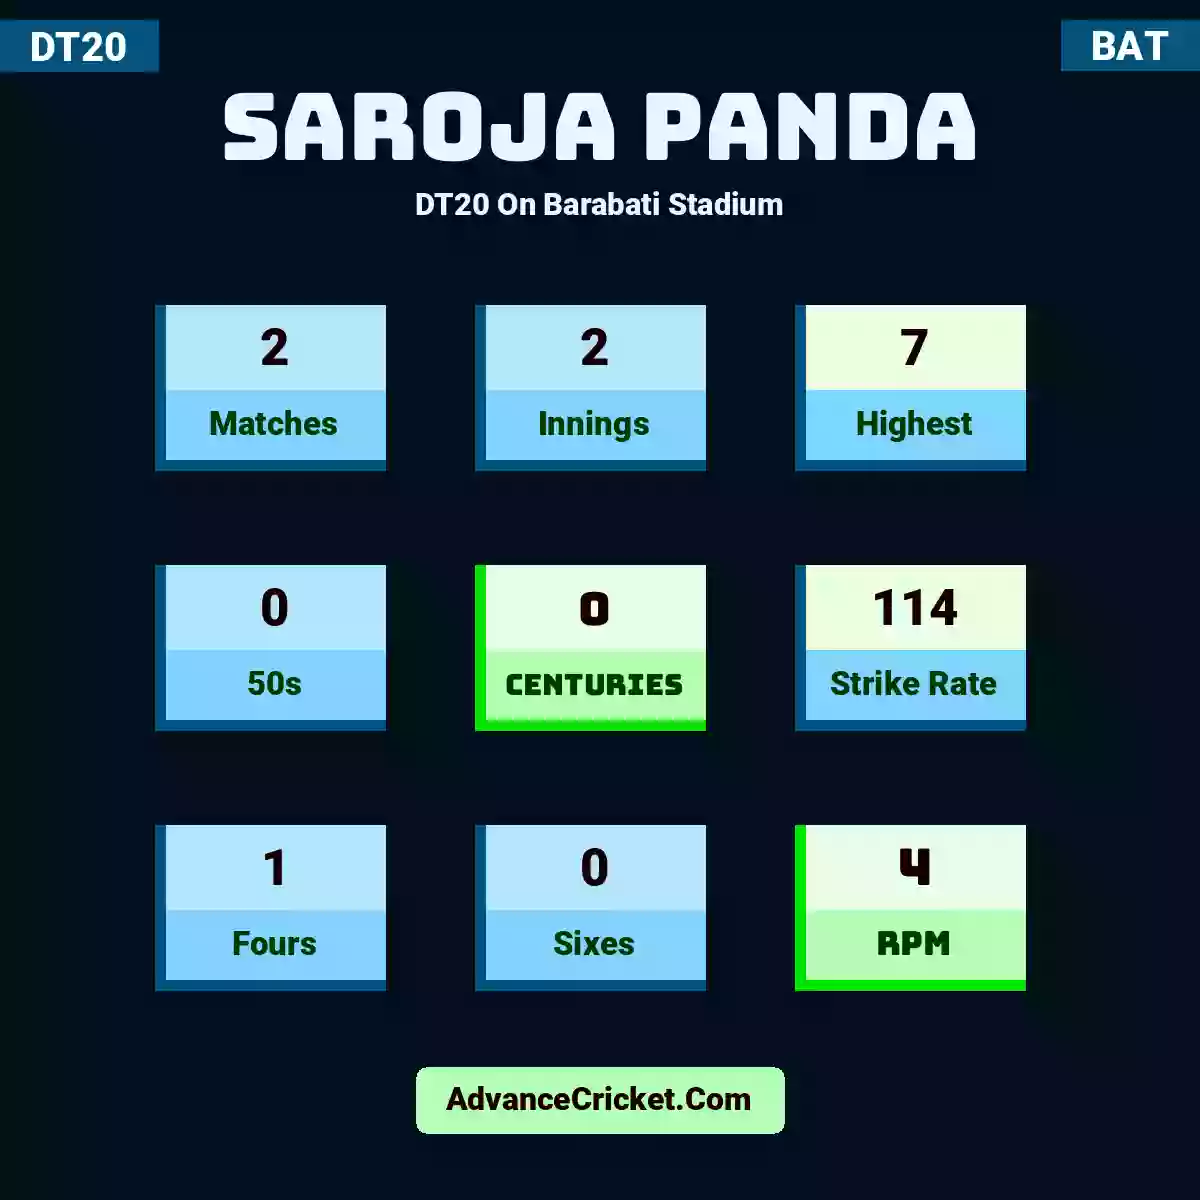 Saroja Panda DT20  On Barabati Stadium, Saroja Panda played 2 matches, scored 7 runs as highest, 0 half-centuries, and 0 centuries, with a strike rate of 114. S.Panda hit 1 fours and 0 sixes, with an RPM of 4.